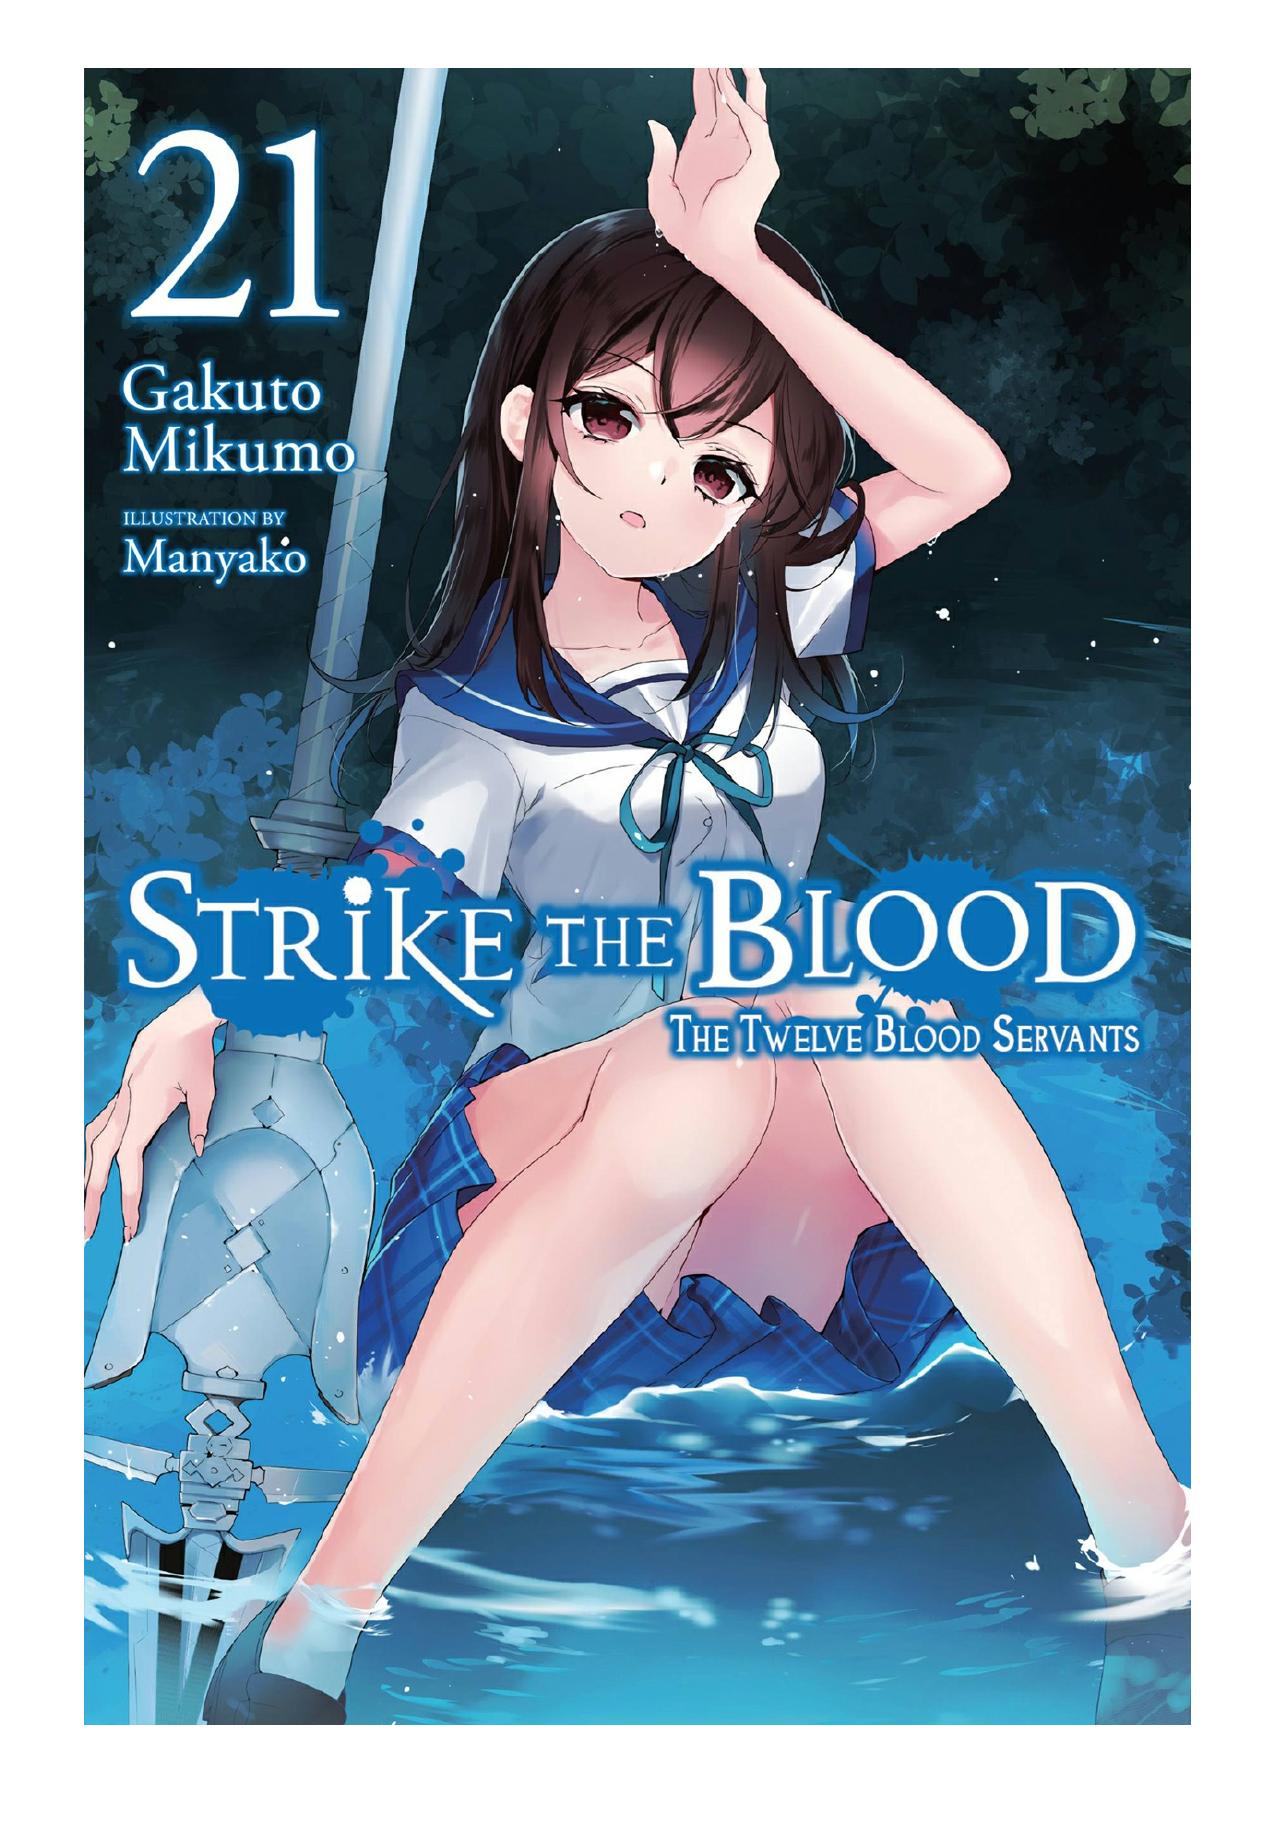 Strike the Blood, Vol. 21: The Twelve Blood Servants by Gakuto Mikumo & Manyako